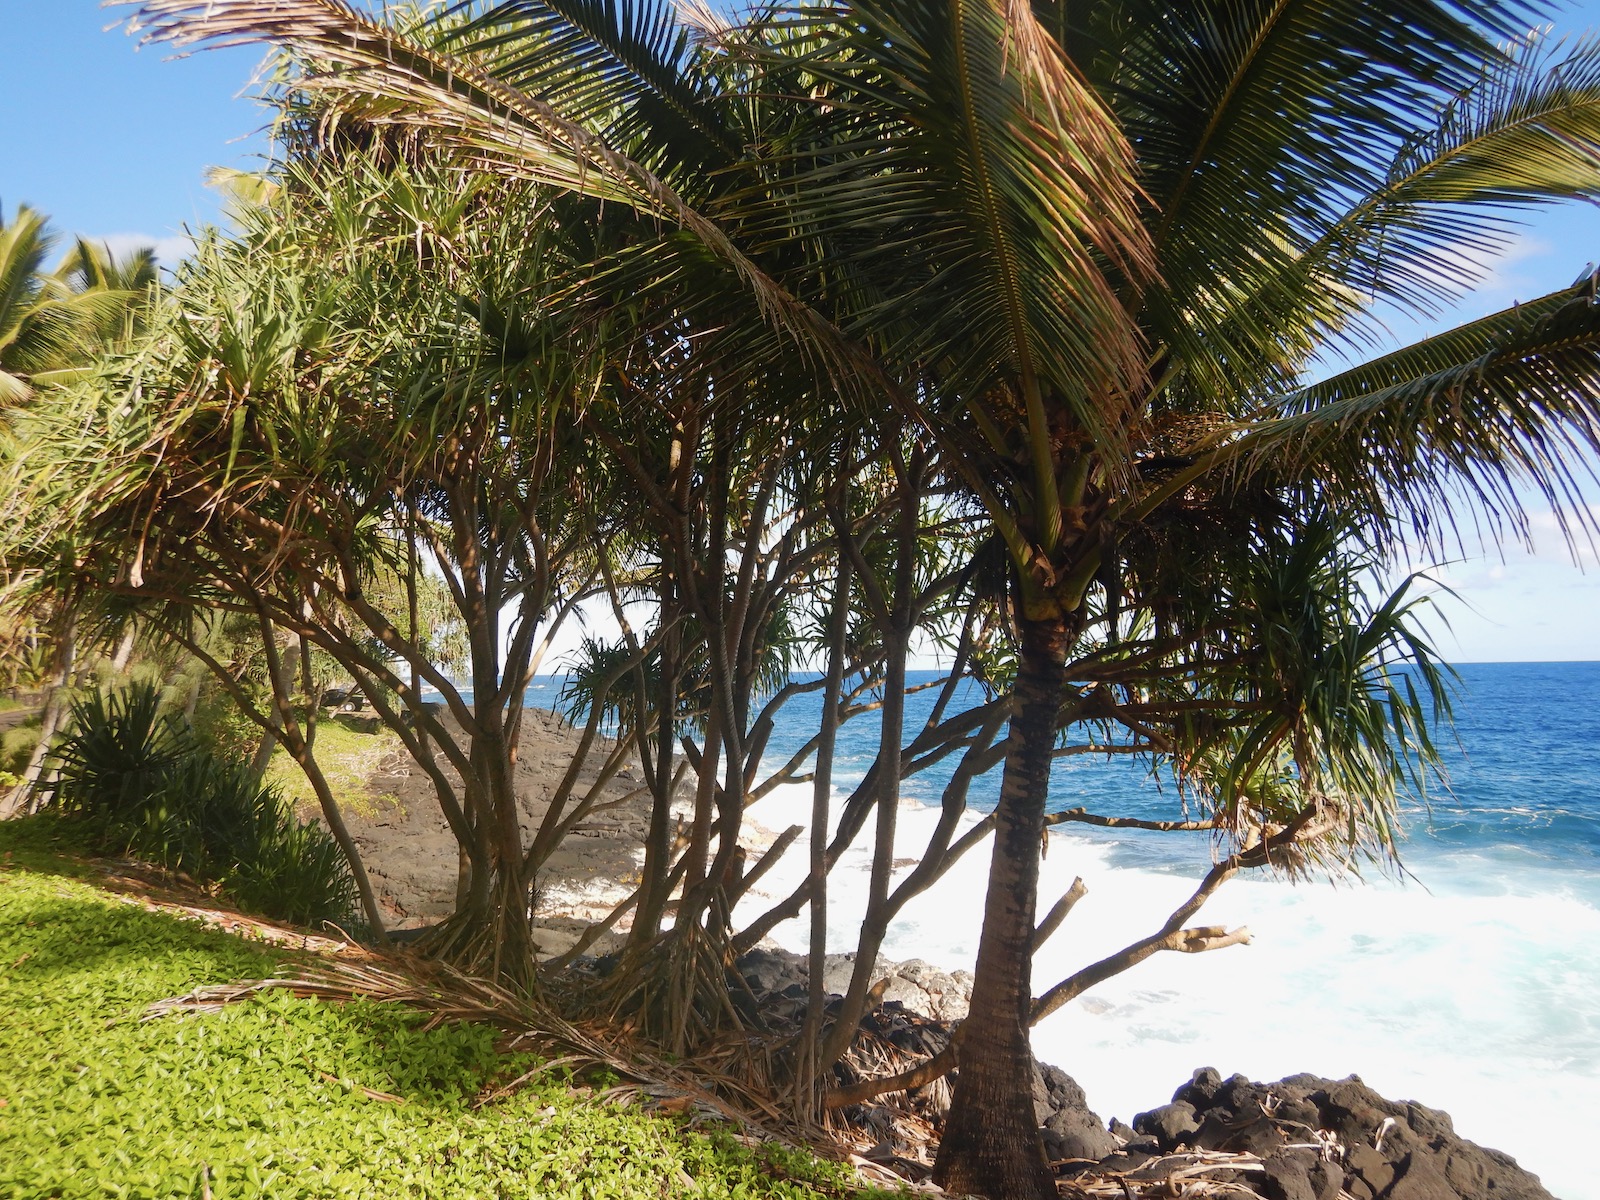 Grove of hala (palm) trees beside the ocean in Hawaii